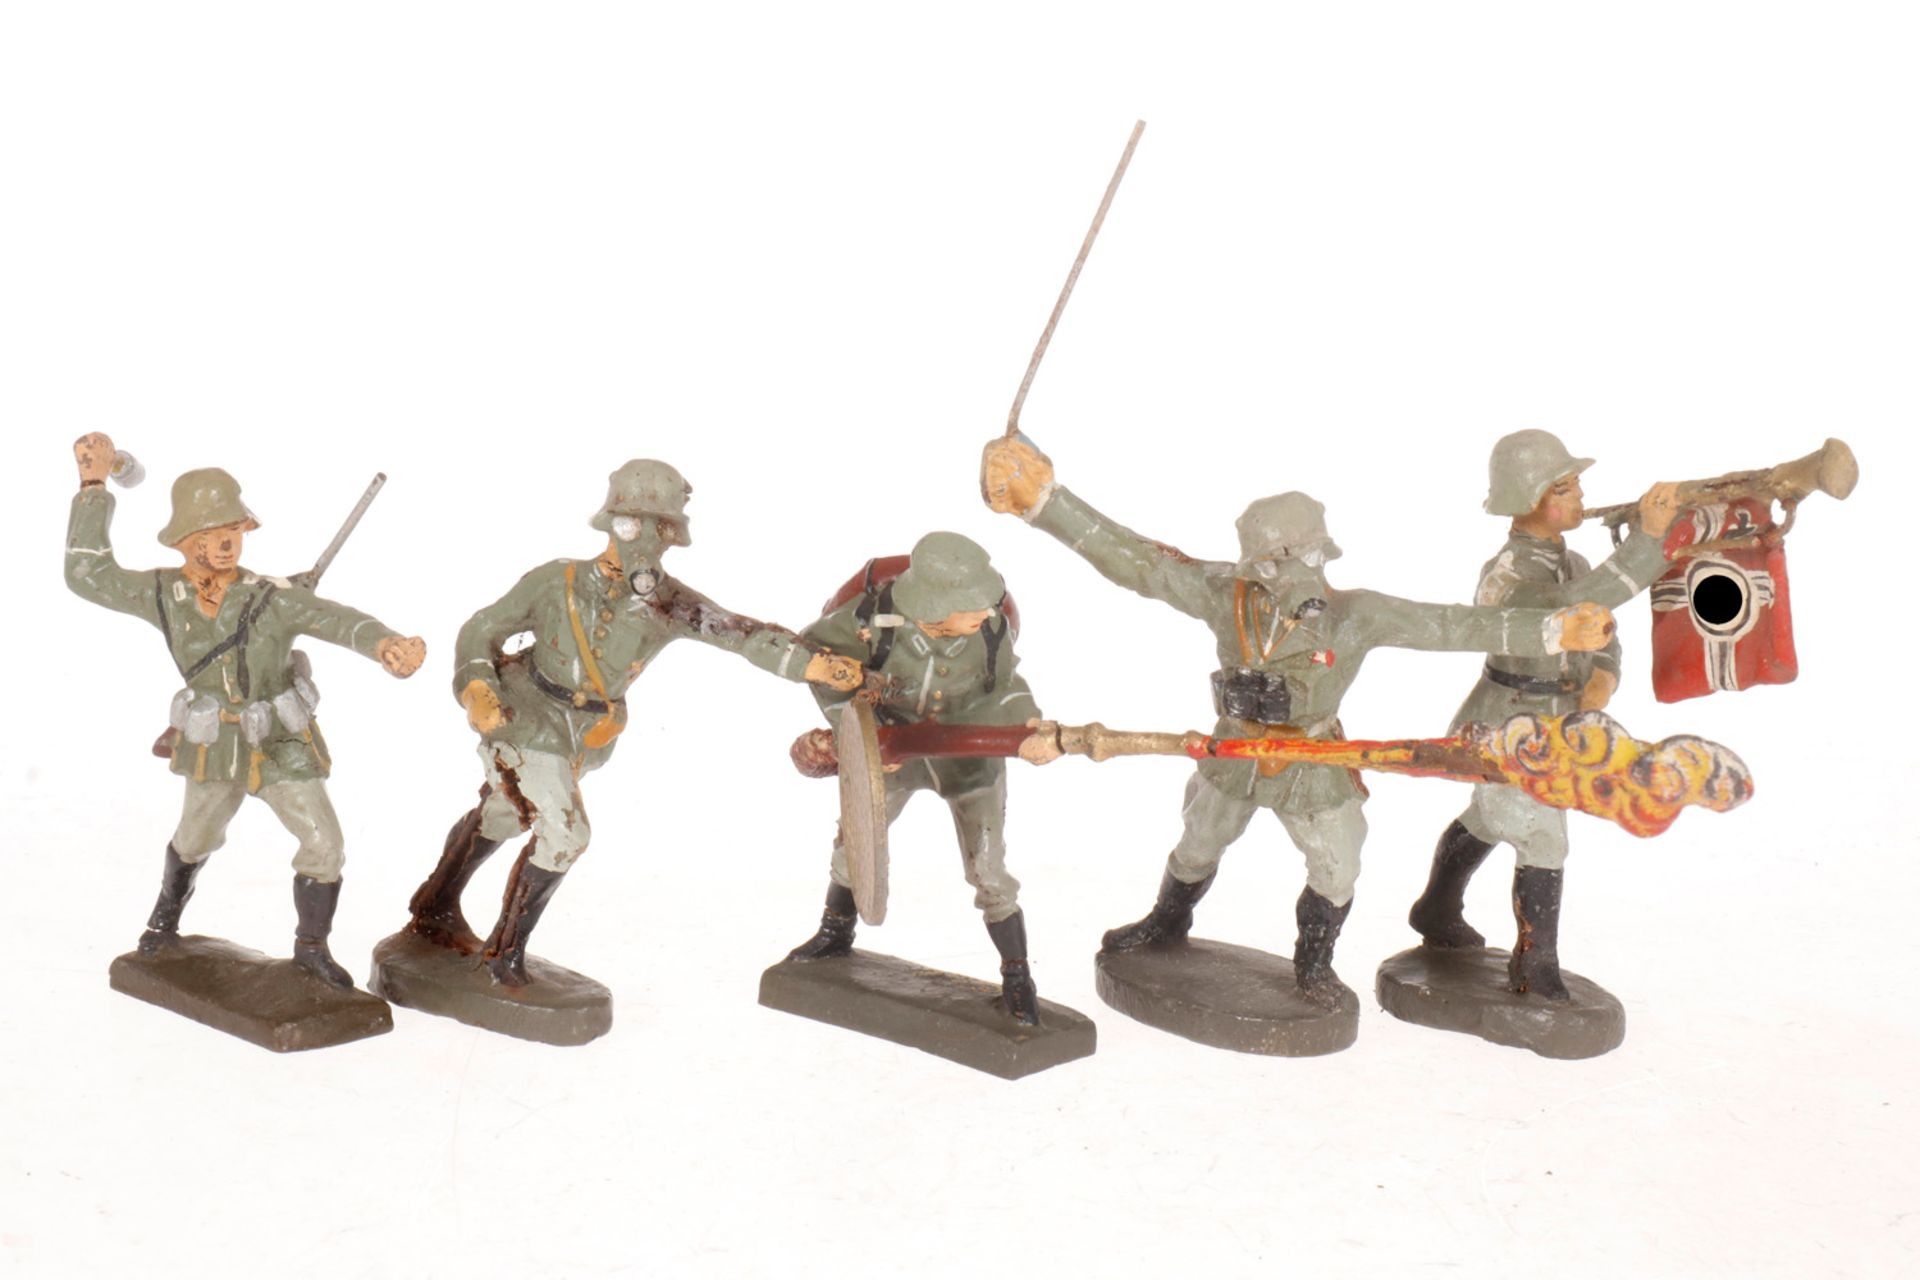 5 versch. Soldaten, Masse, HL, darunter 1 Fanfarebläser, LS, Z 3